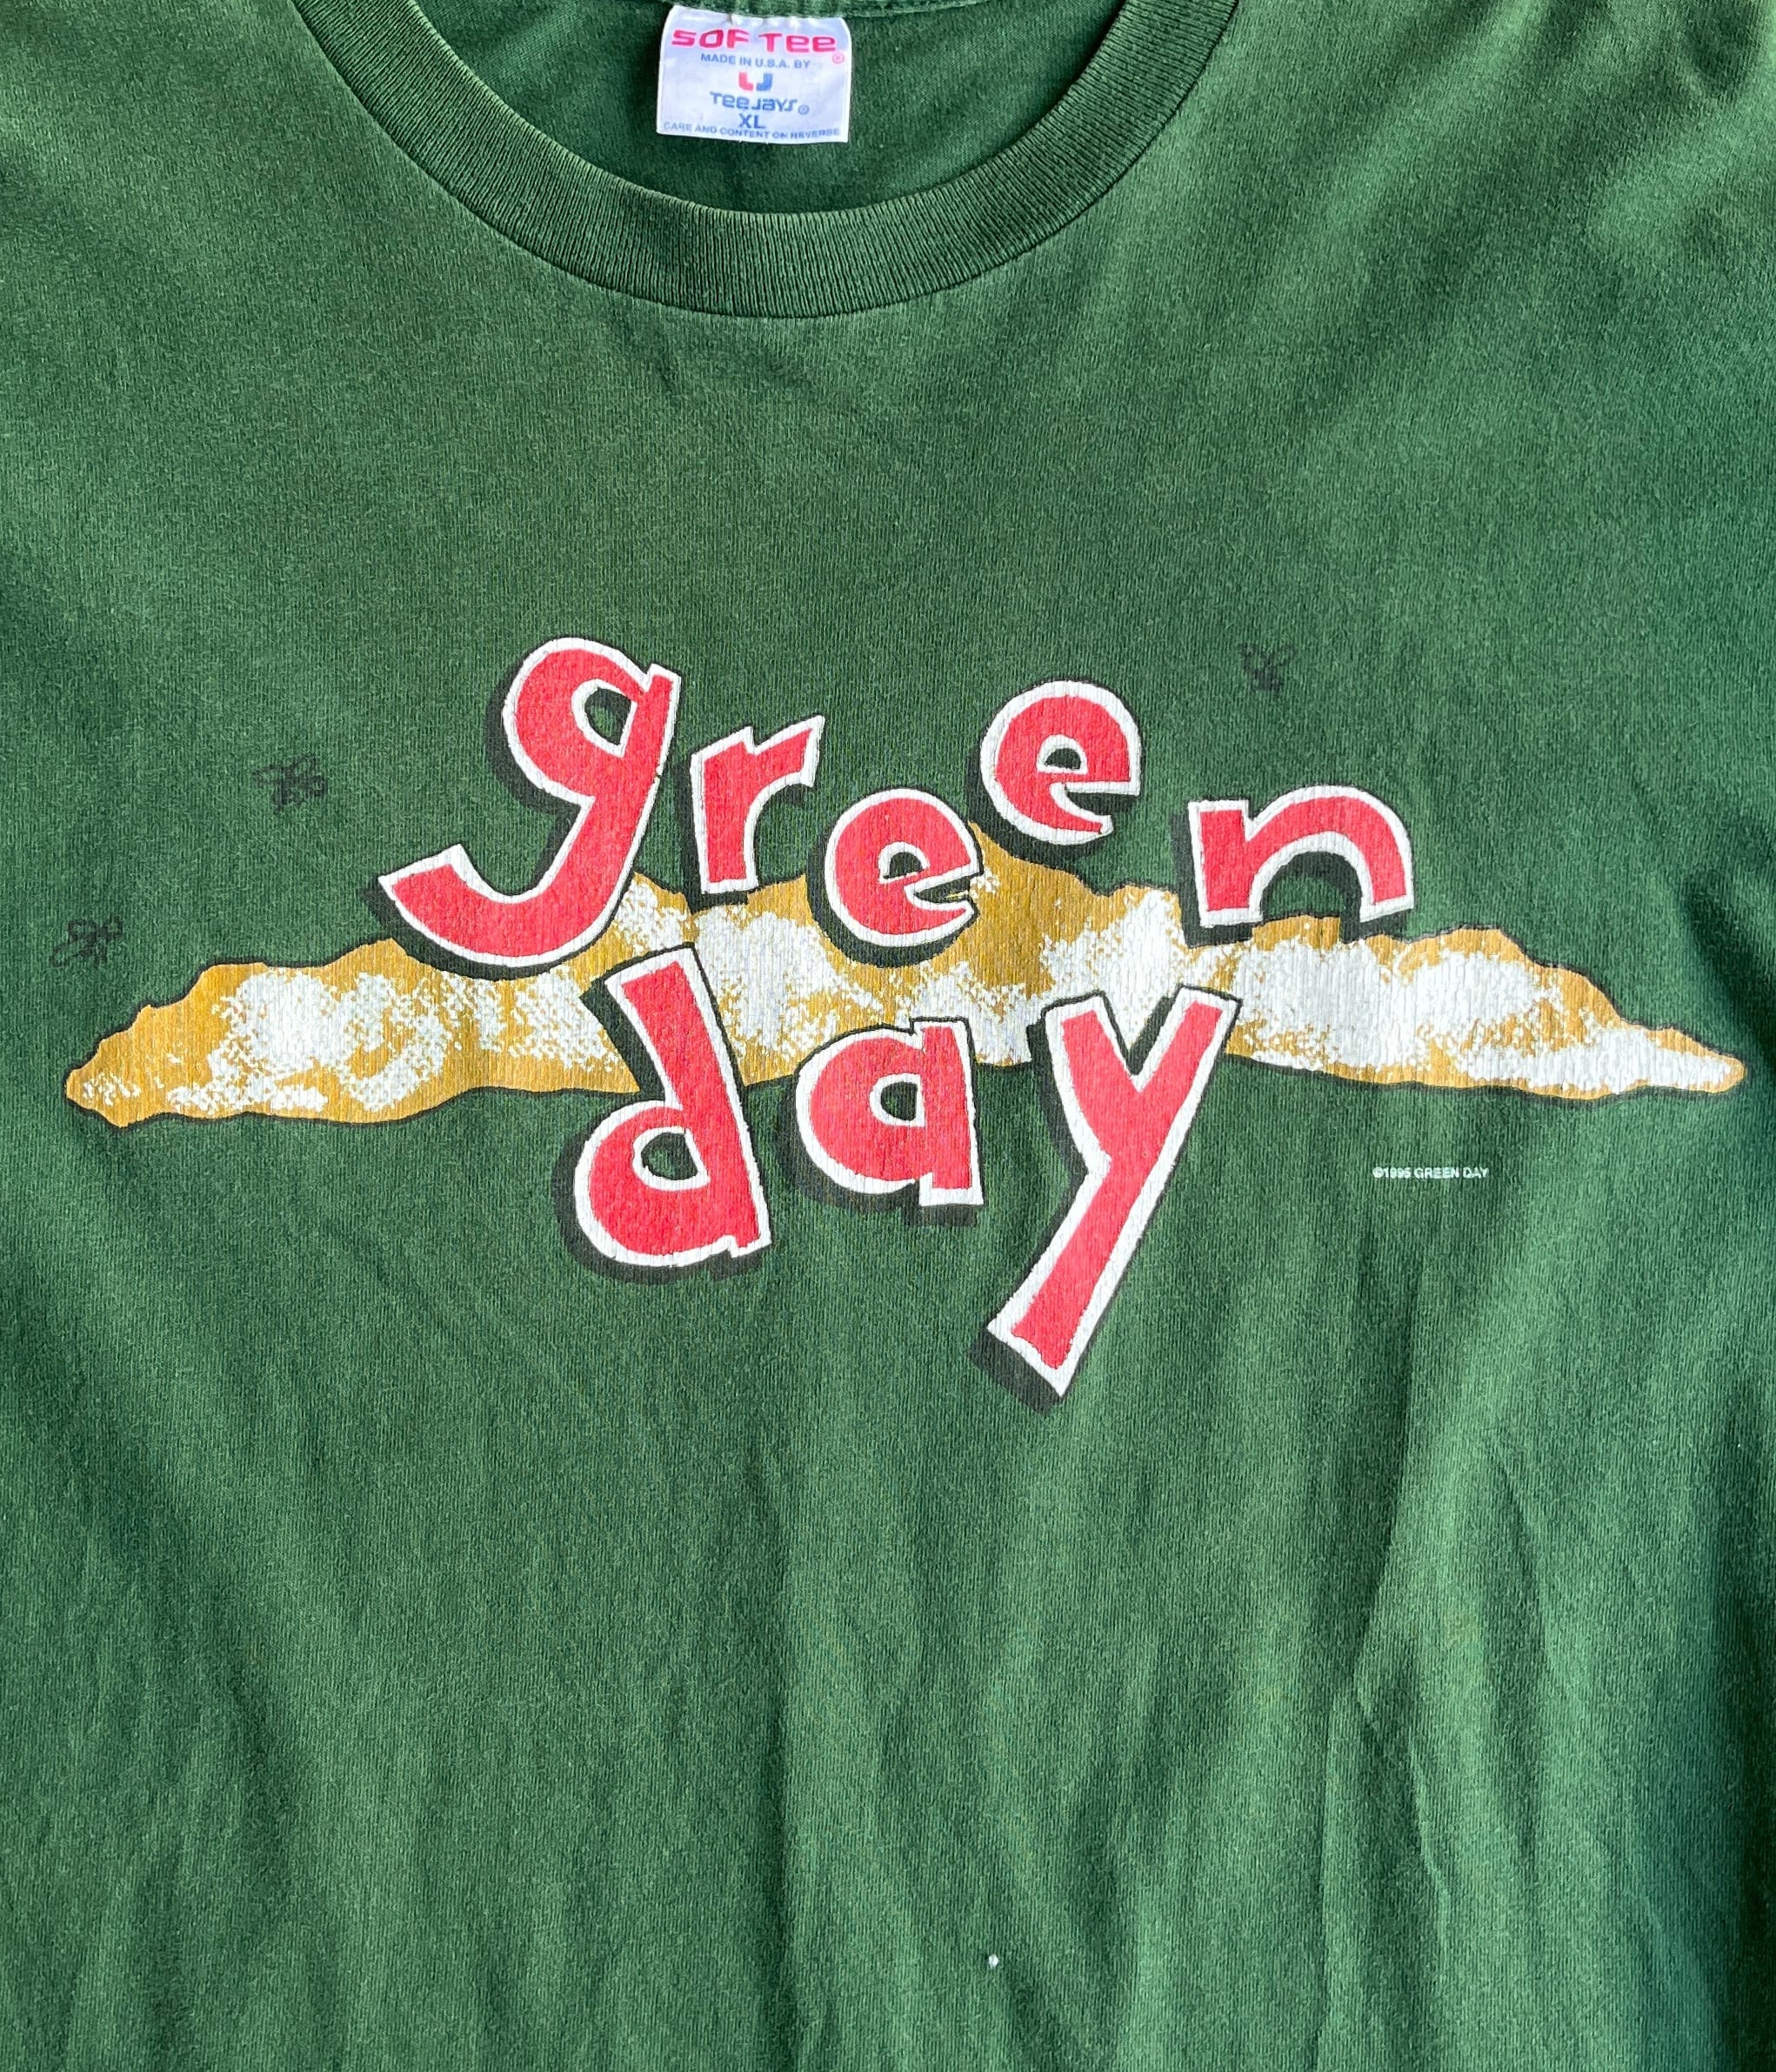 GREEN DAY Tシャツ1995コピーライト　シングルステッチ